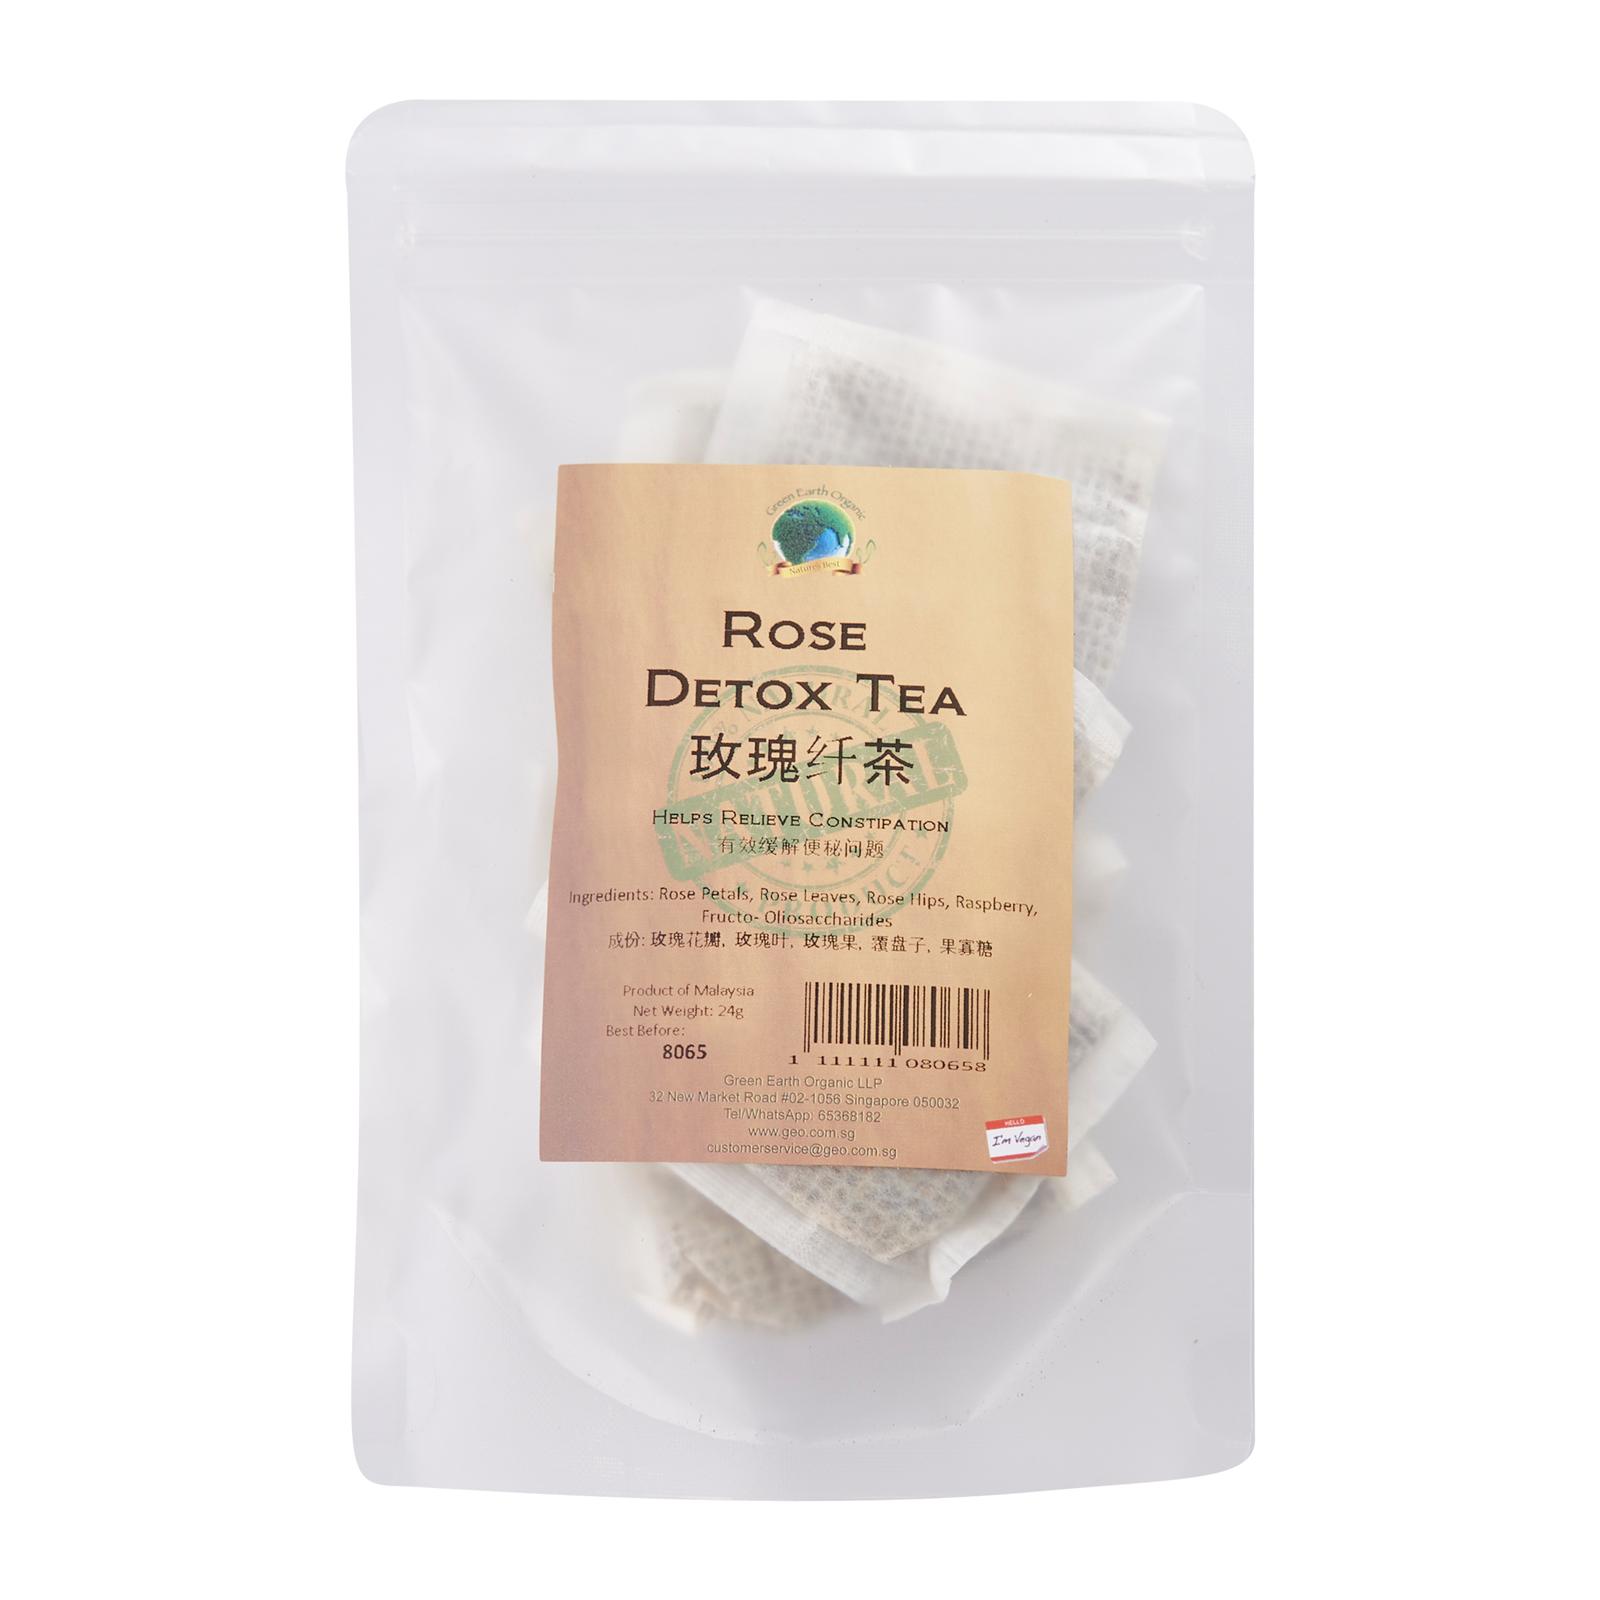 Rose Detox Tea 玫瑰纤茶 (10 Teabags)